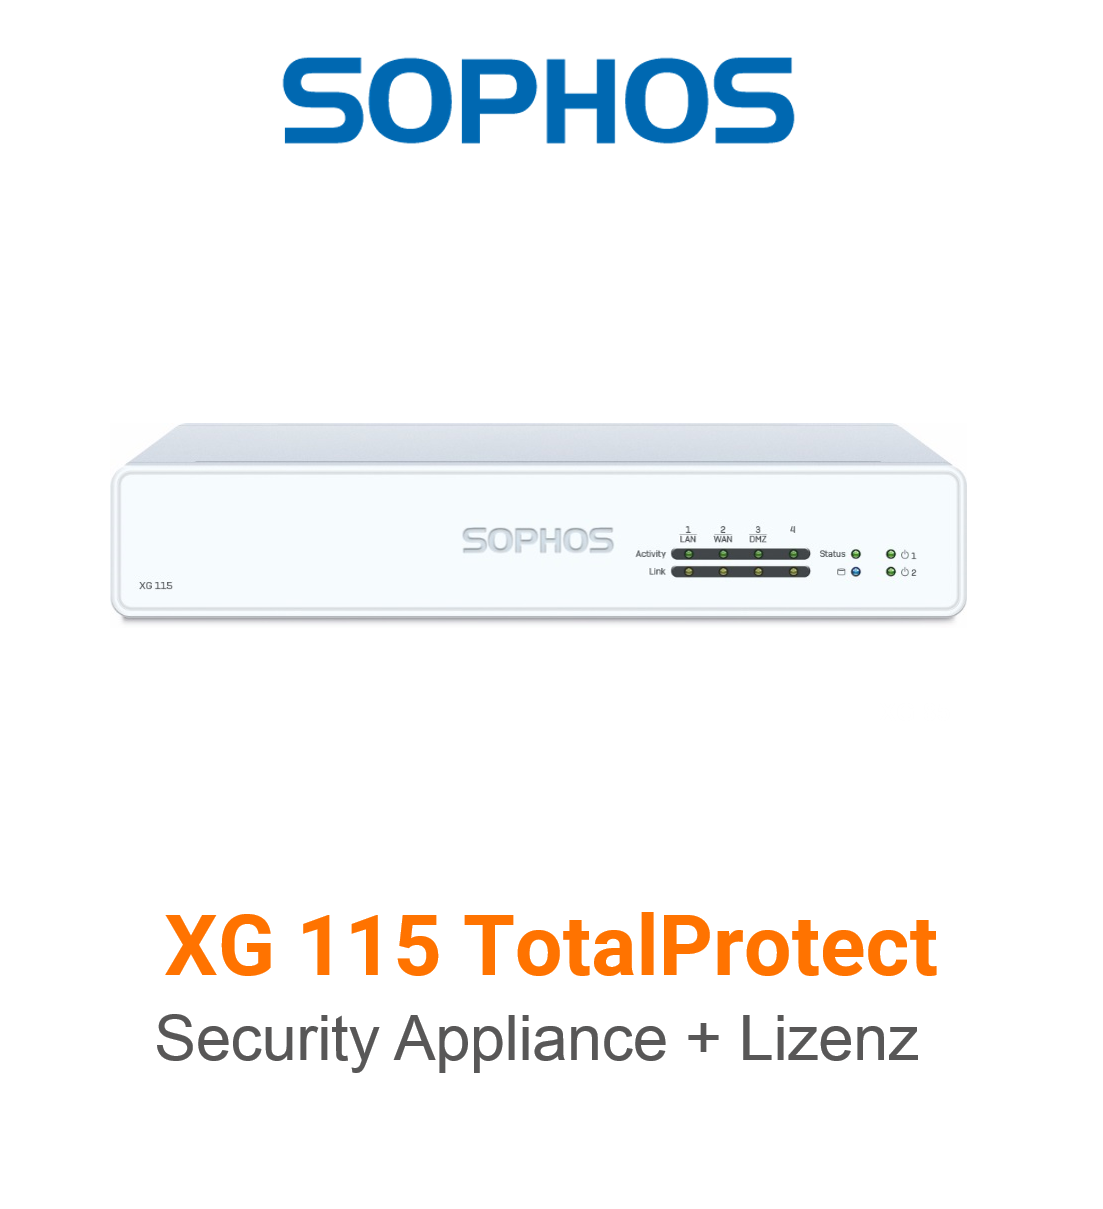 Sophos XG 115 TotalProtect Bundle (Hardware + Lizenz)